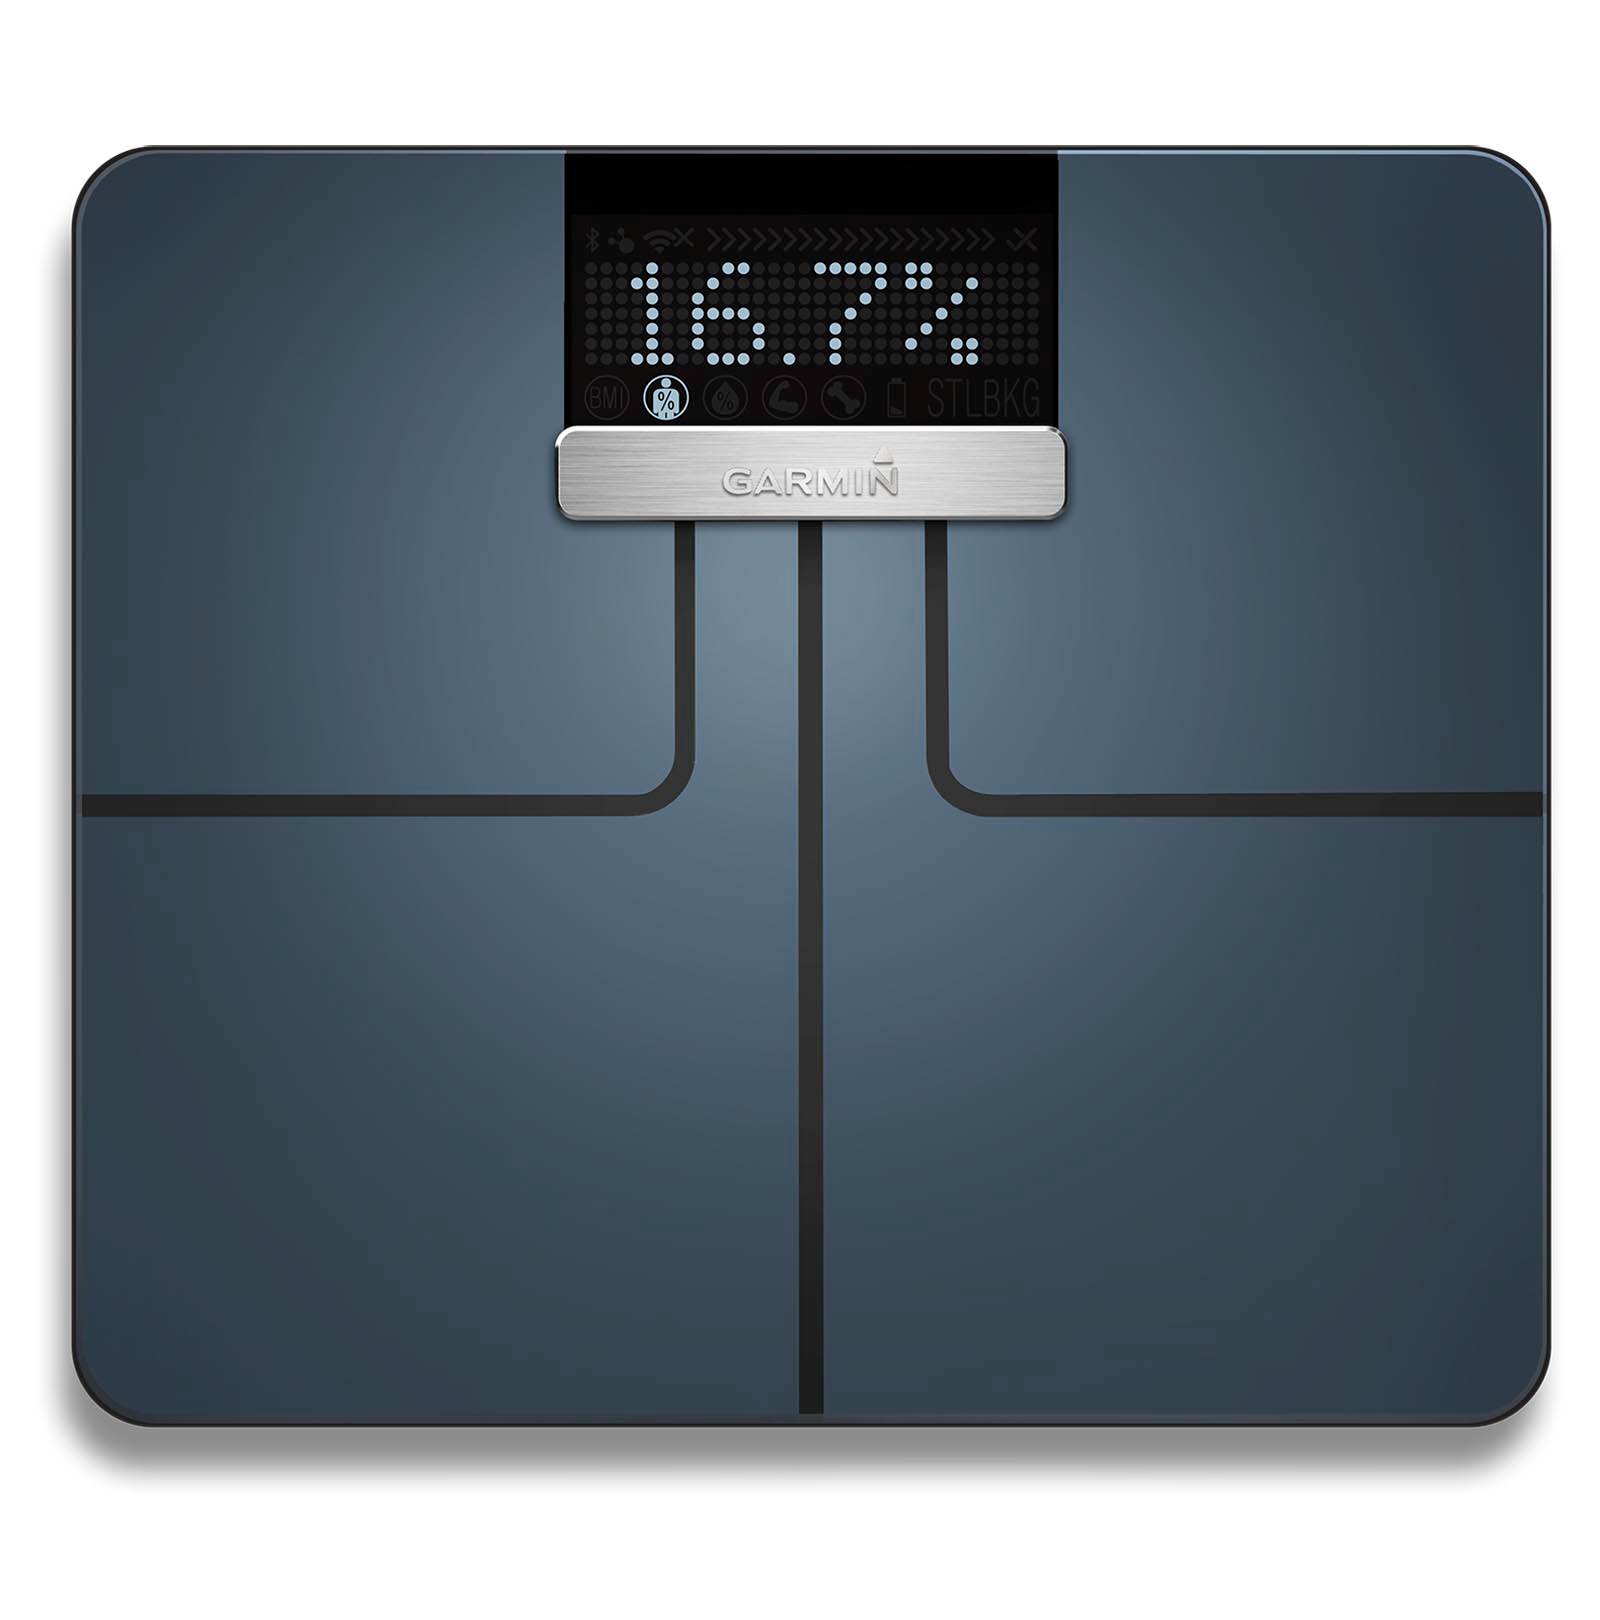 Garmin Index Smart WiFi Bluetooth BMI Calculator Digital Weight Scale, Black - image 5 of 9